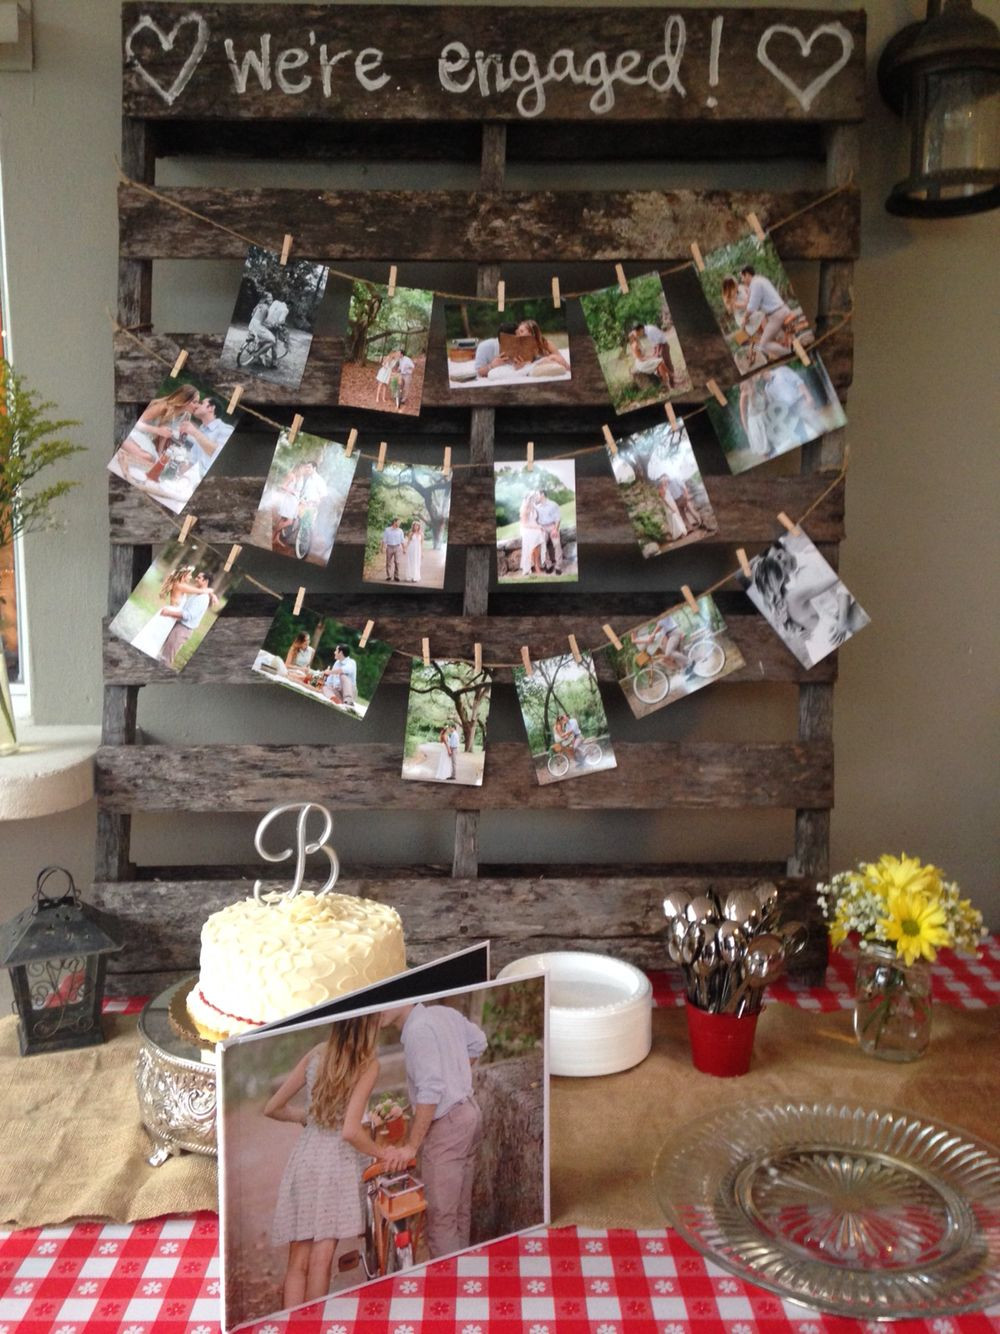 Bbq Engagement Party Ideas
 I do BBQ … Danielle s wedding